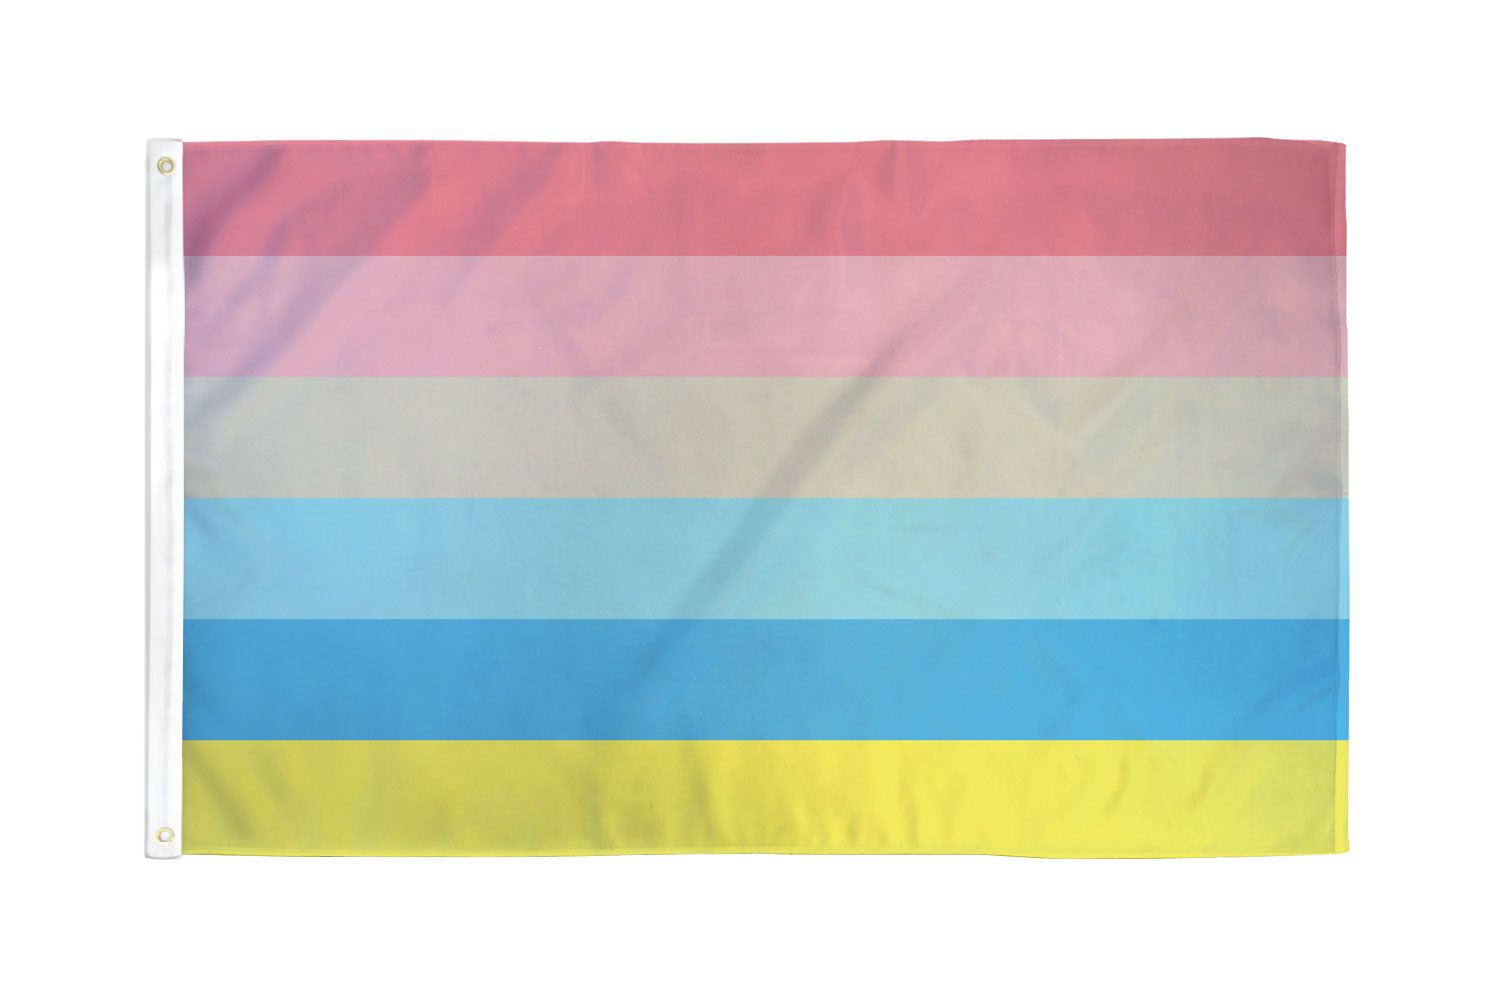 Genderflux Pride Flag - Rebellious Unicorns